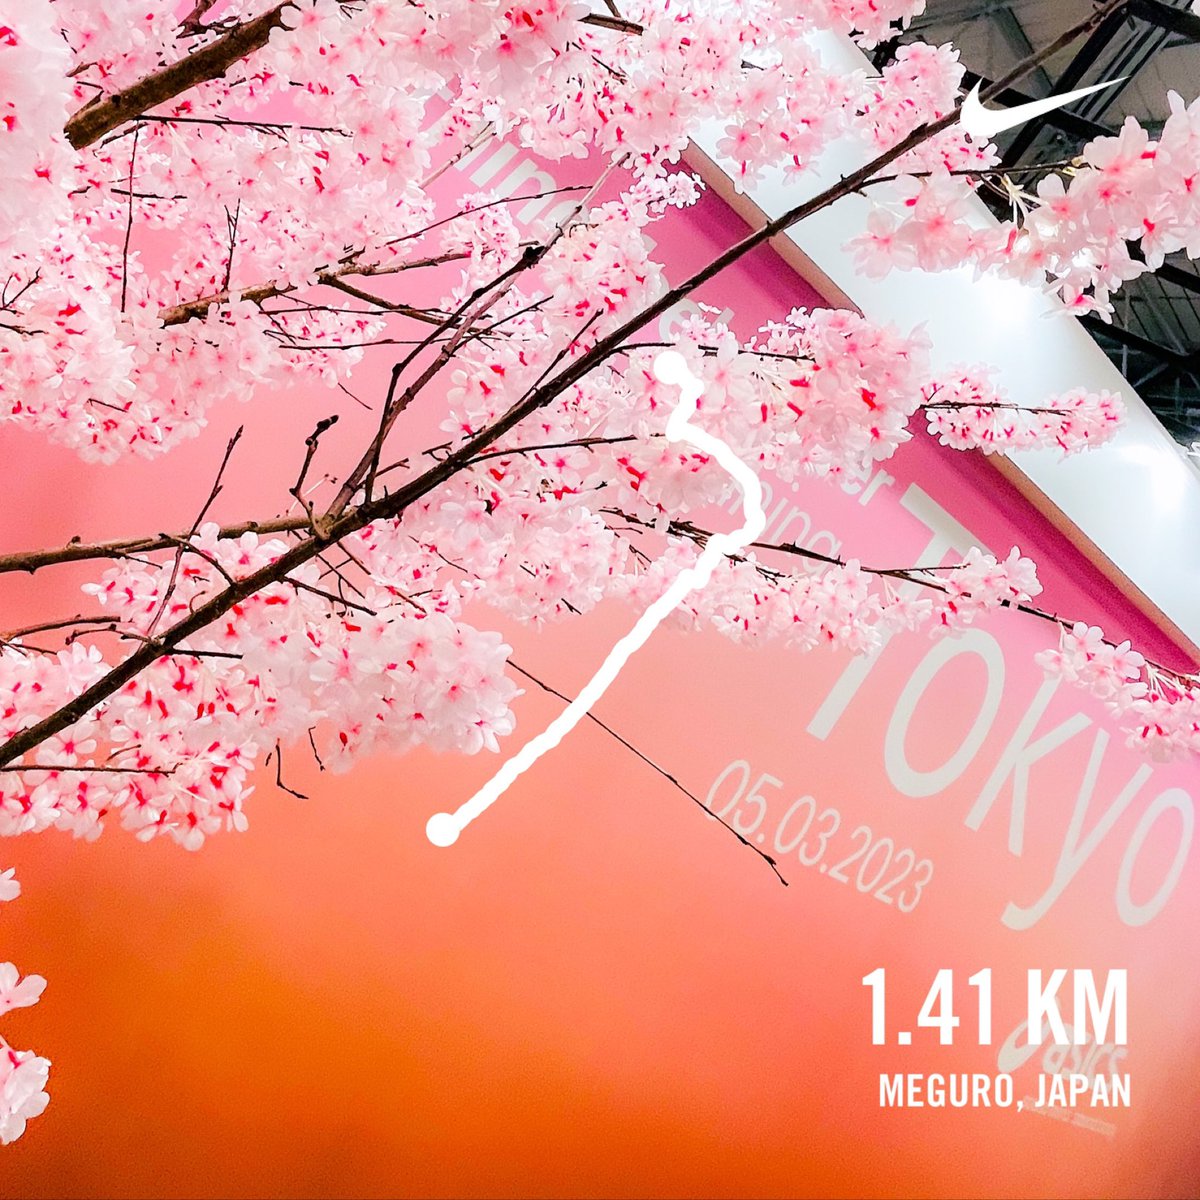 🍎
#run #nikeplus #flowers #花 #風景 #ジョギング #ランニング #ランニング女子 #東京マラソン #tokyomarathon #tokyomarathon2023 #asics #asicsrunning #soundmindsoundbody #ランナー #マラソン #フルマラソン #アシックス